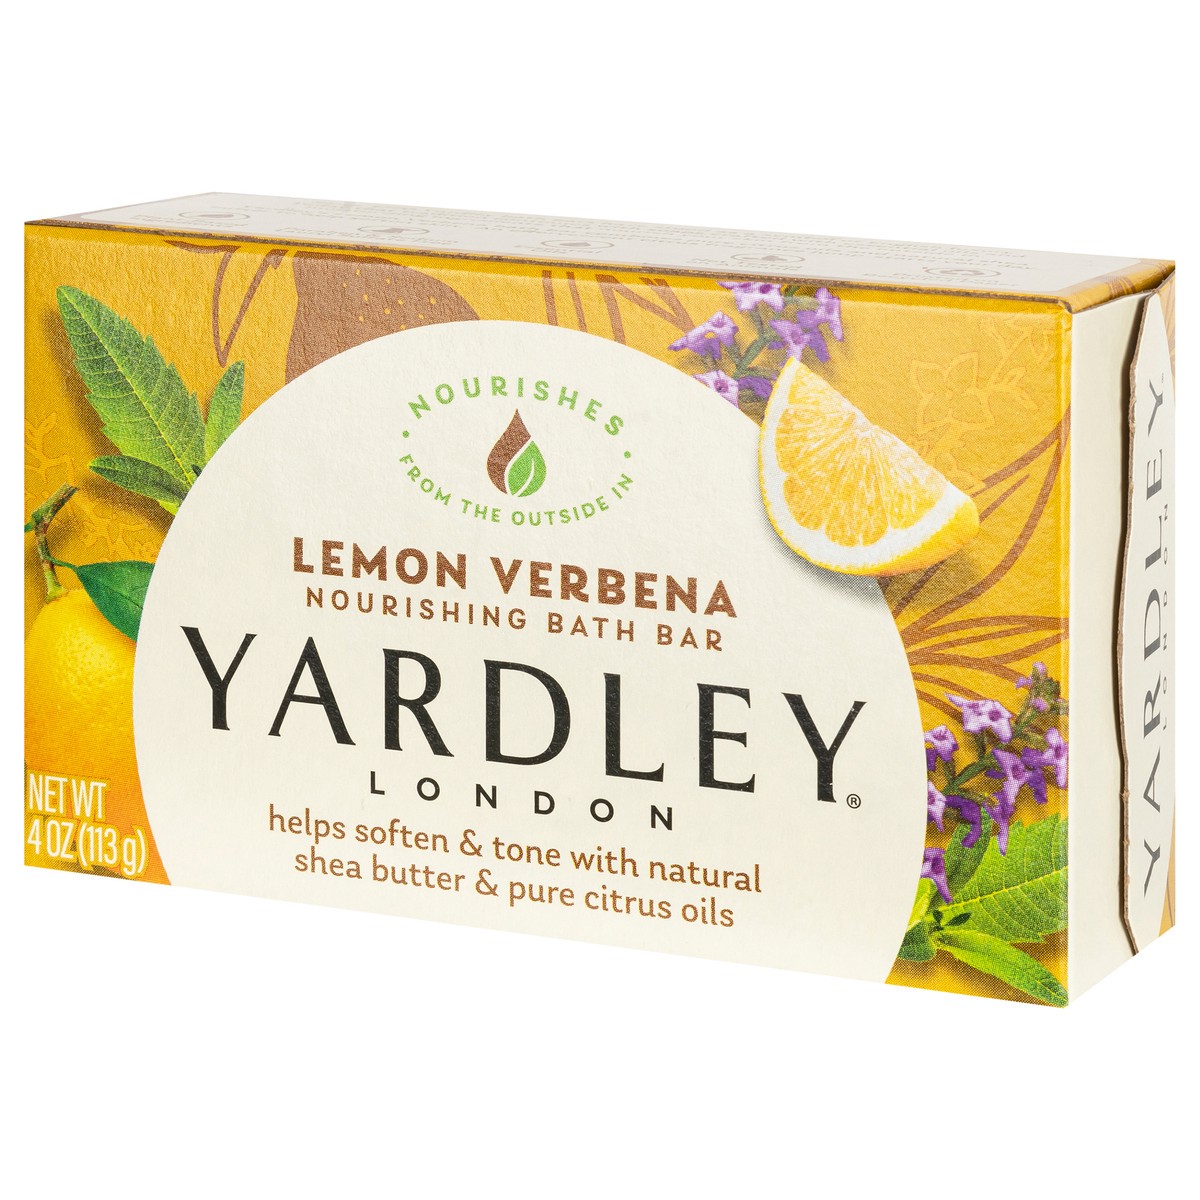 slide 2 of 12, Yardley London Nourishing Bath Soap Bar Lemon Verbena, Helps Soften & Tone Skin with Natural Shea Butter & Pure Citrus Oils, 4.0 oz Bath Bar, 1 Soap Bar, 4 oz